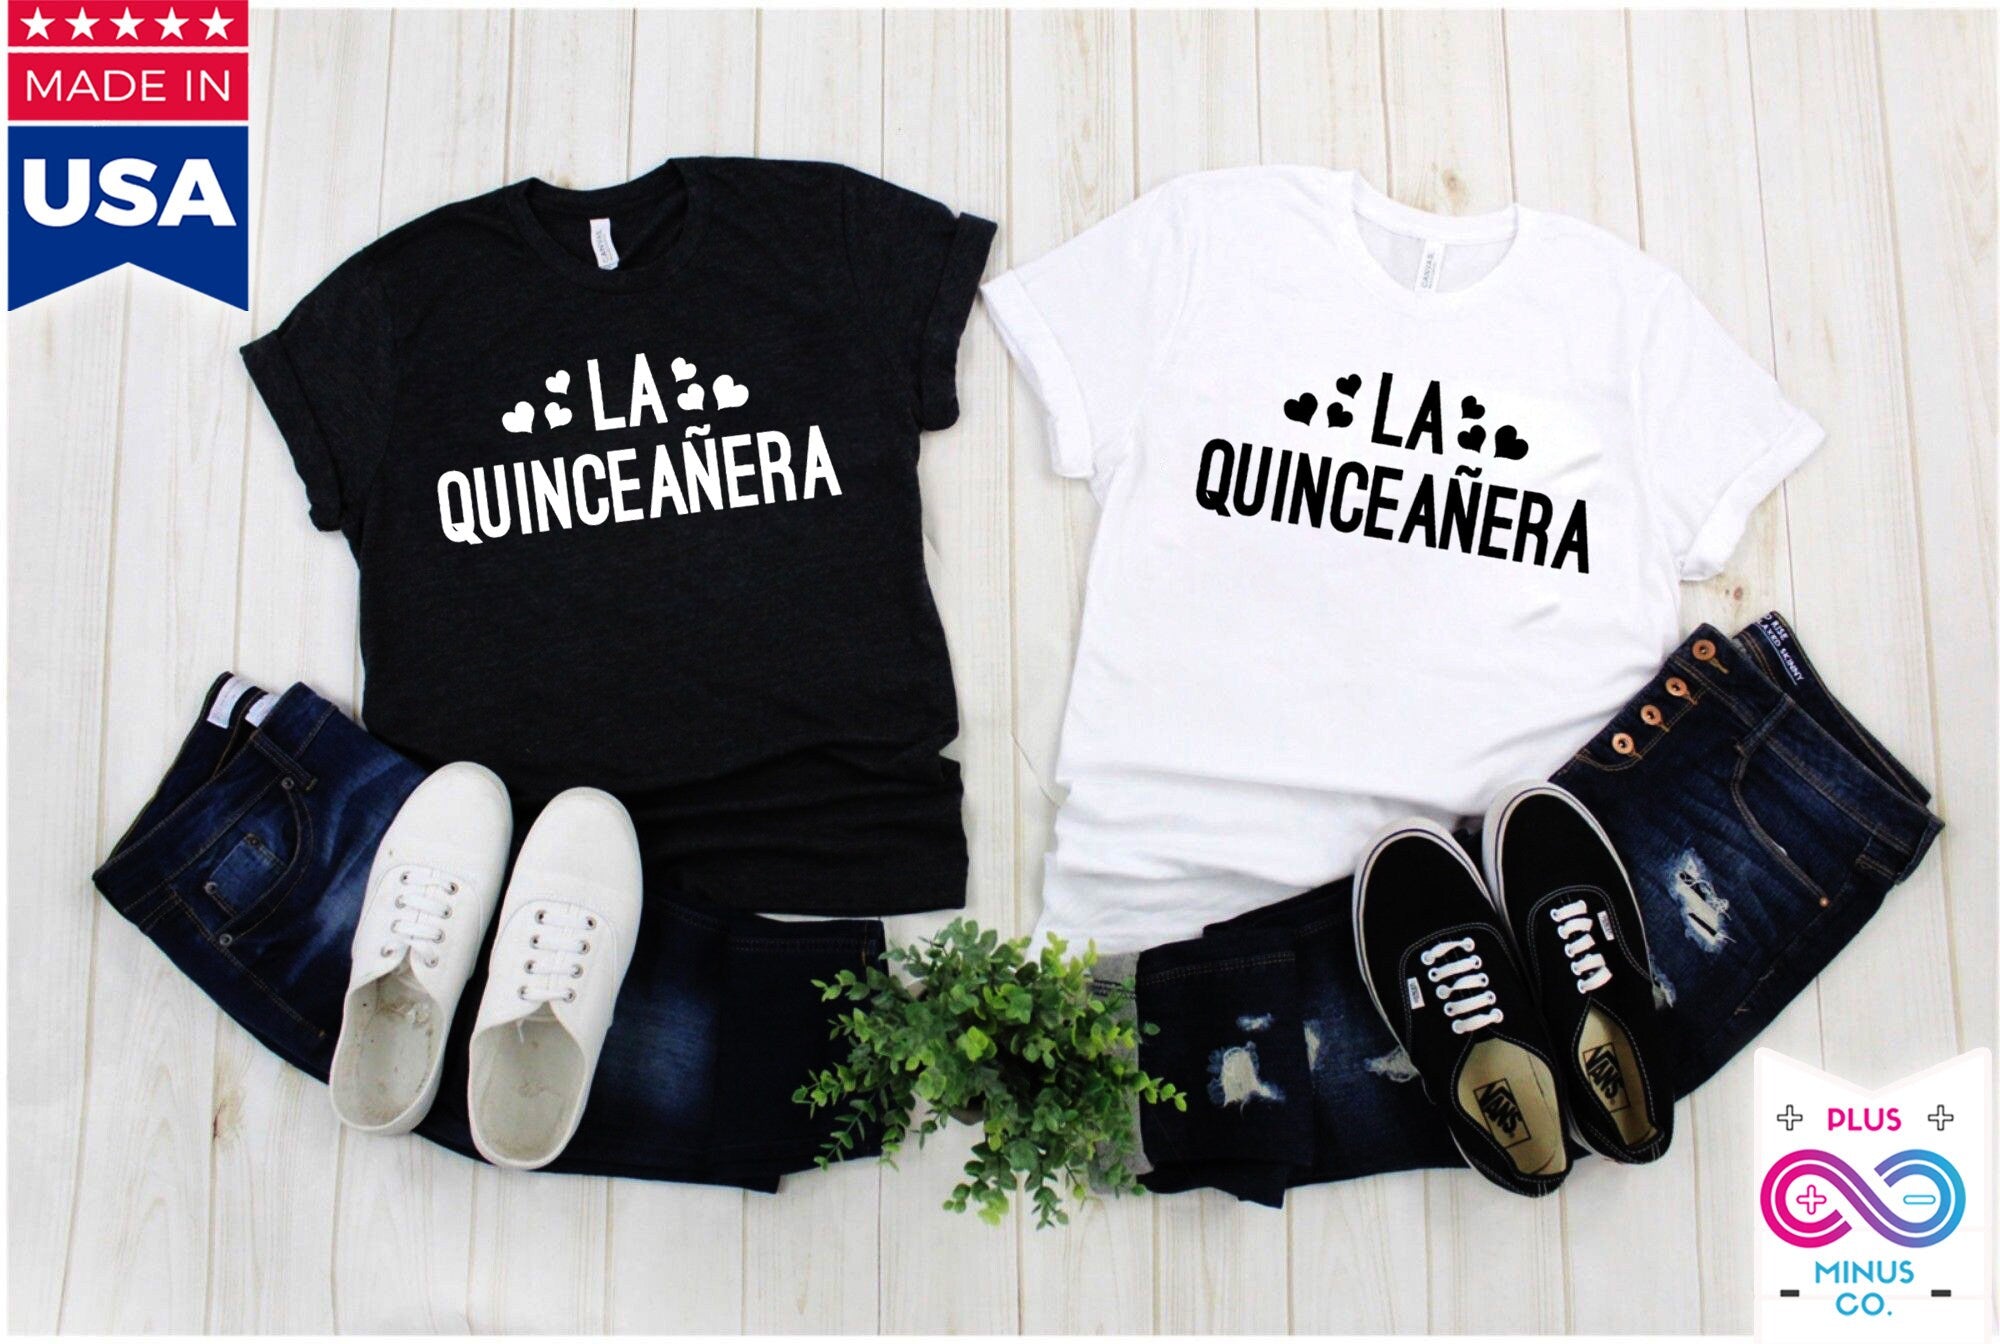 Španielske tričká La Quinceañera Latina, Mexická košeľa Quinceanera Darčekové oblečenie na párty, Quince Anos Párty košele z dulí - plusminusco.com